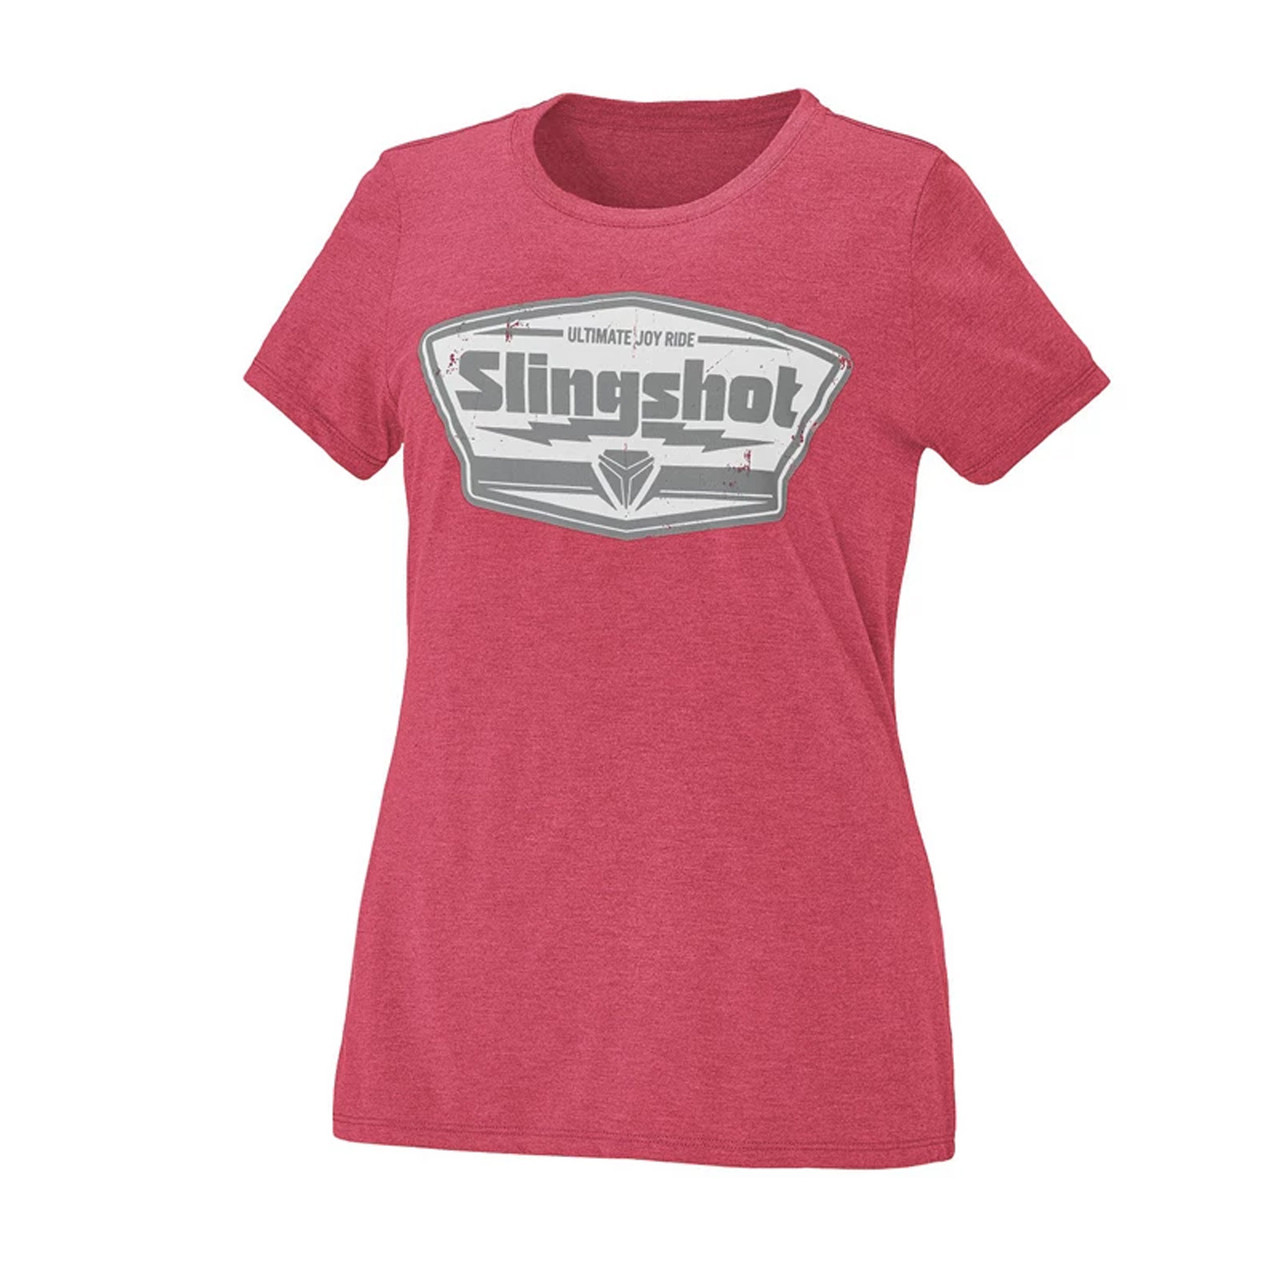 Slingshot Polaris New OEM Woman's Medium Short-Sleeve Badge T-Shirt, 286070003